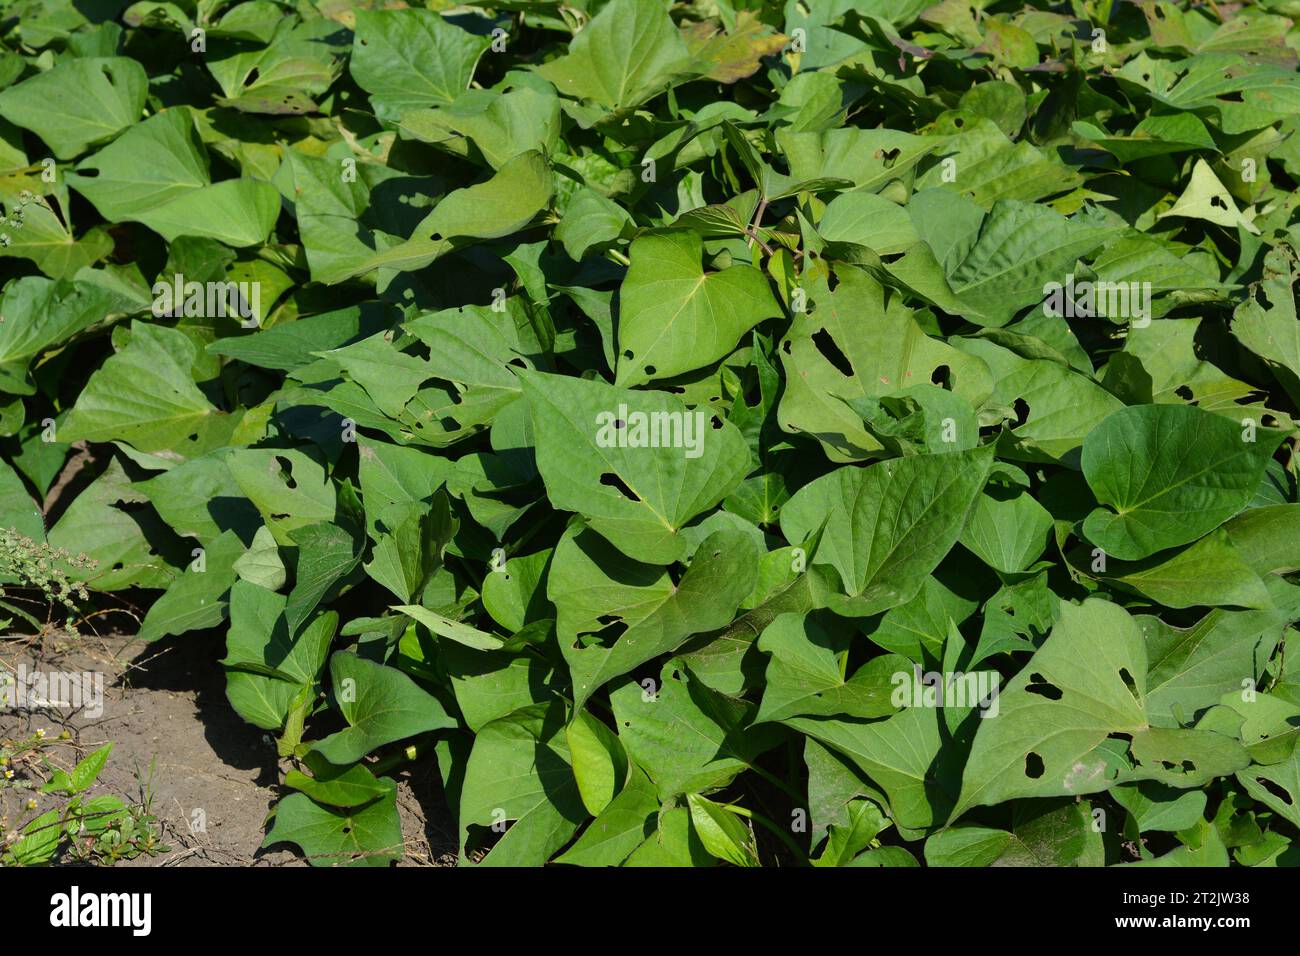 Sweet Potato Vine: Grow and Care for Ipomoea Batatas.  Growing sweet potato, ipomoea batatas plant in vegetable garden. Stock Photo